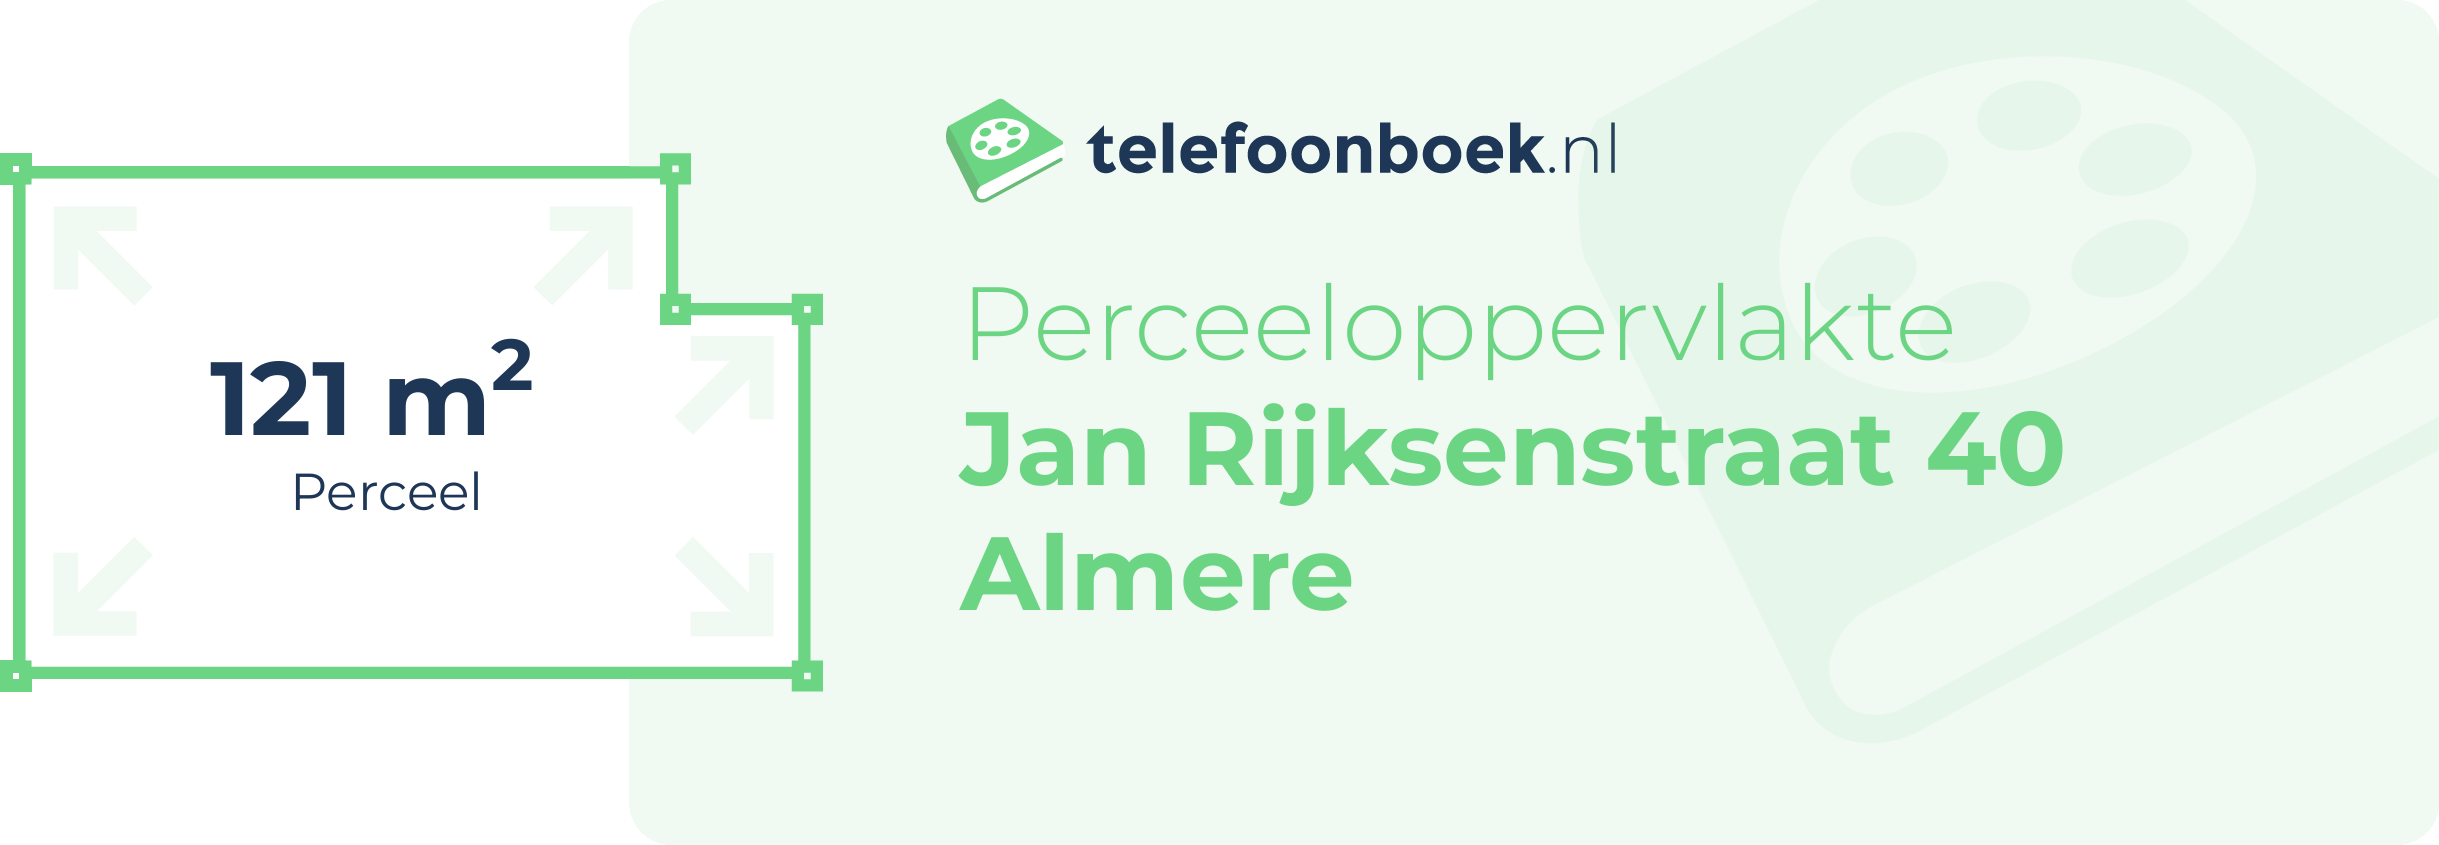 Perceeloppervlakte Jan Rijksenstraat 40 Almere